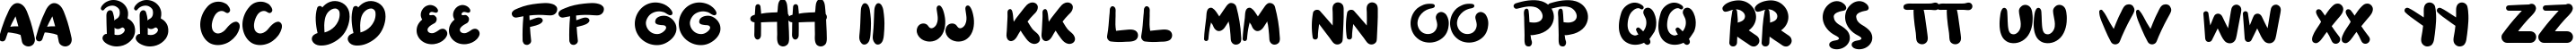 Пример написания английского алфавита шрифтом Ginuks